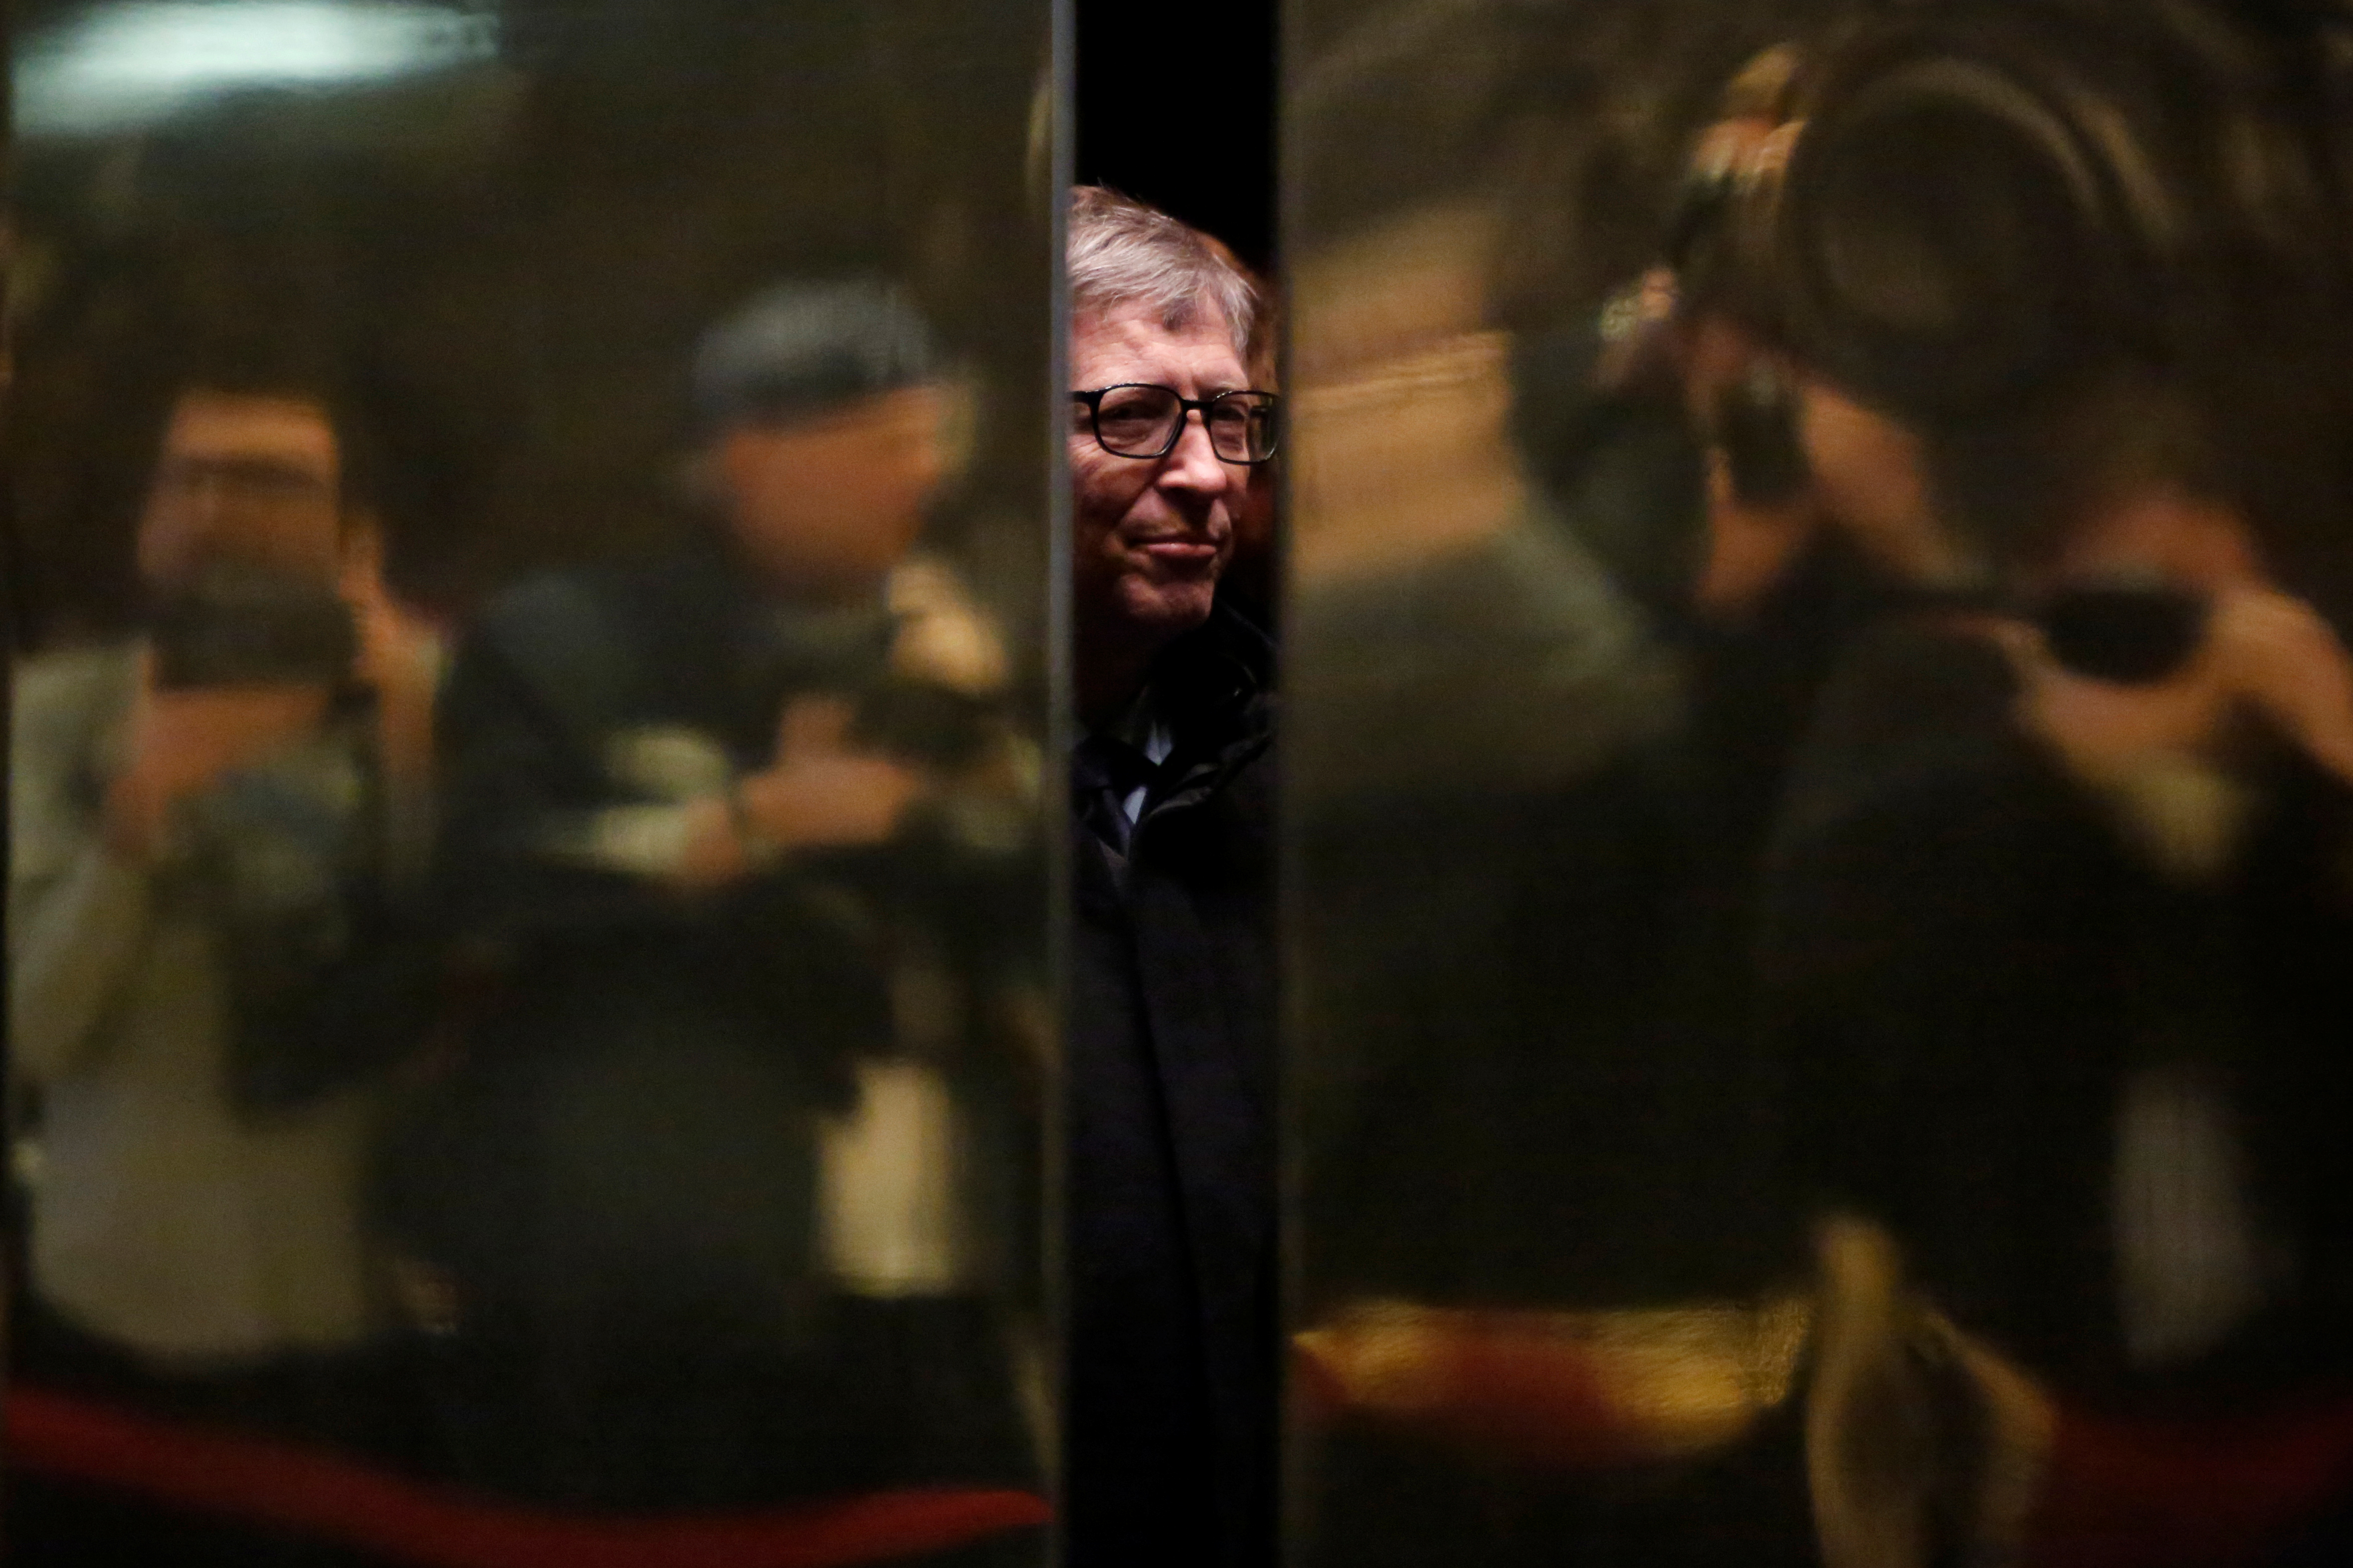 Businessman Bill Gates arrives at Trump Tower in Manhattan, New York City on December 13, 2016